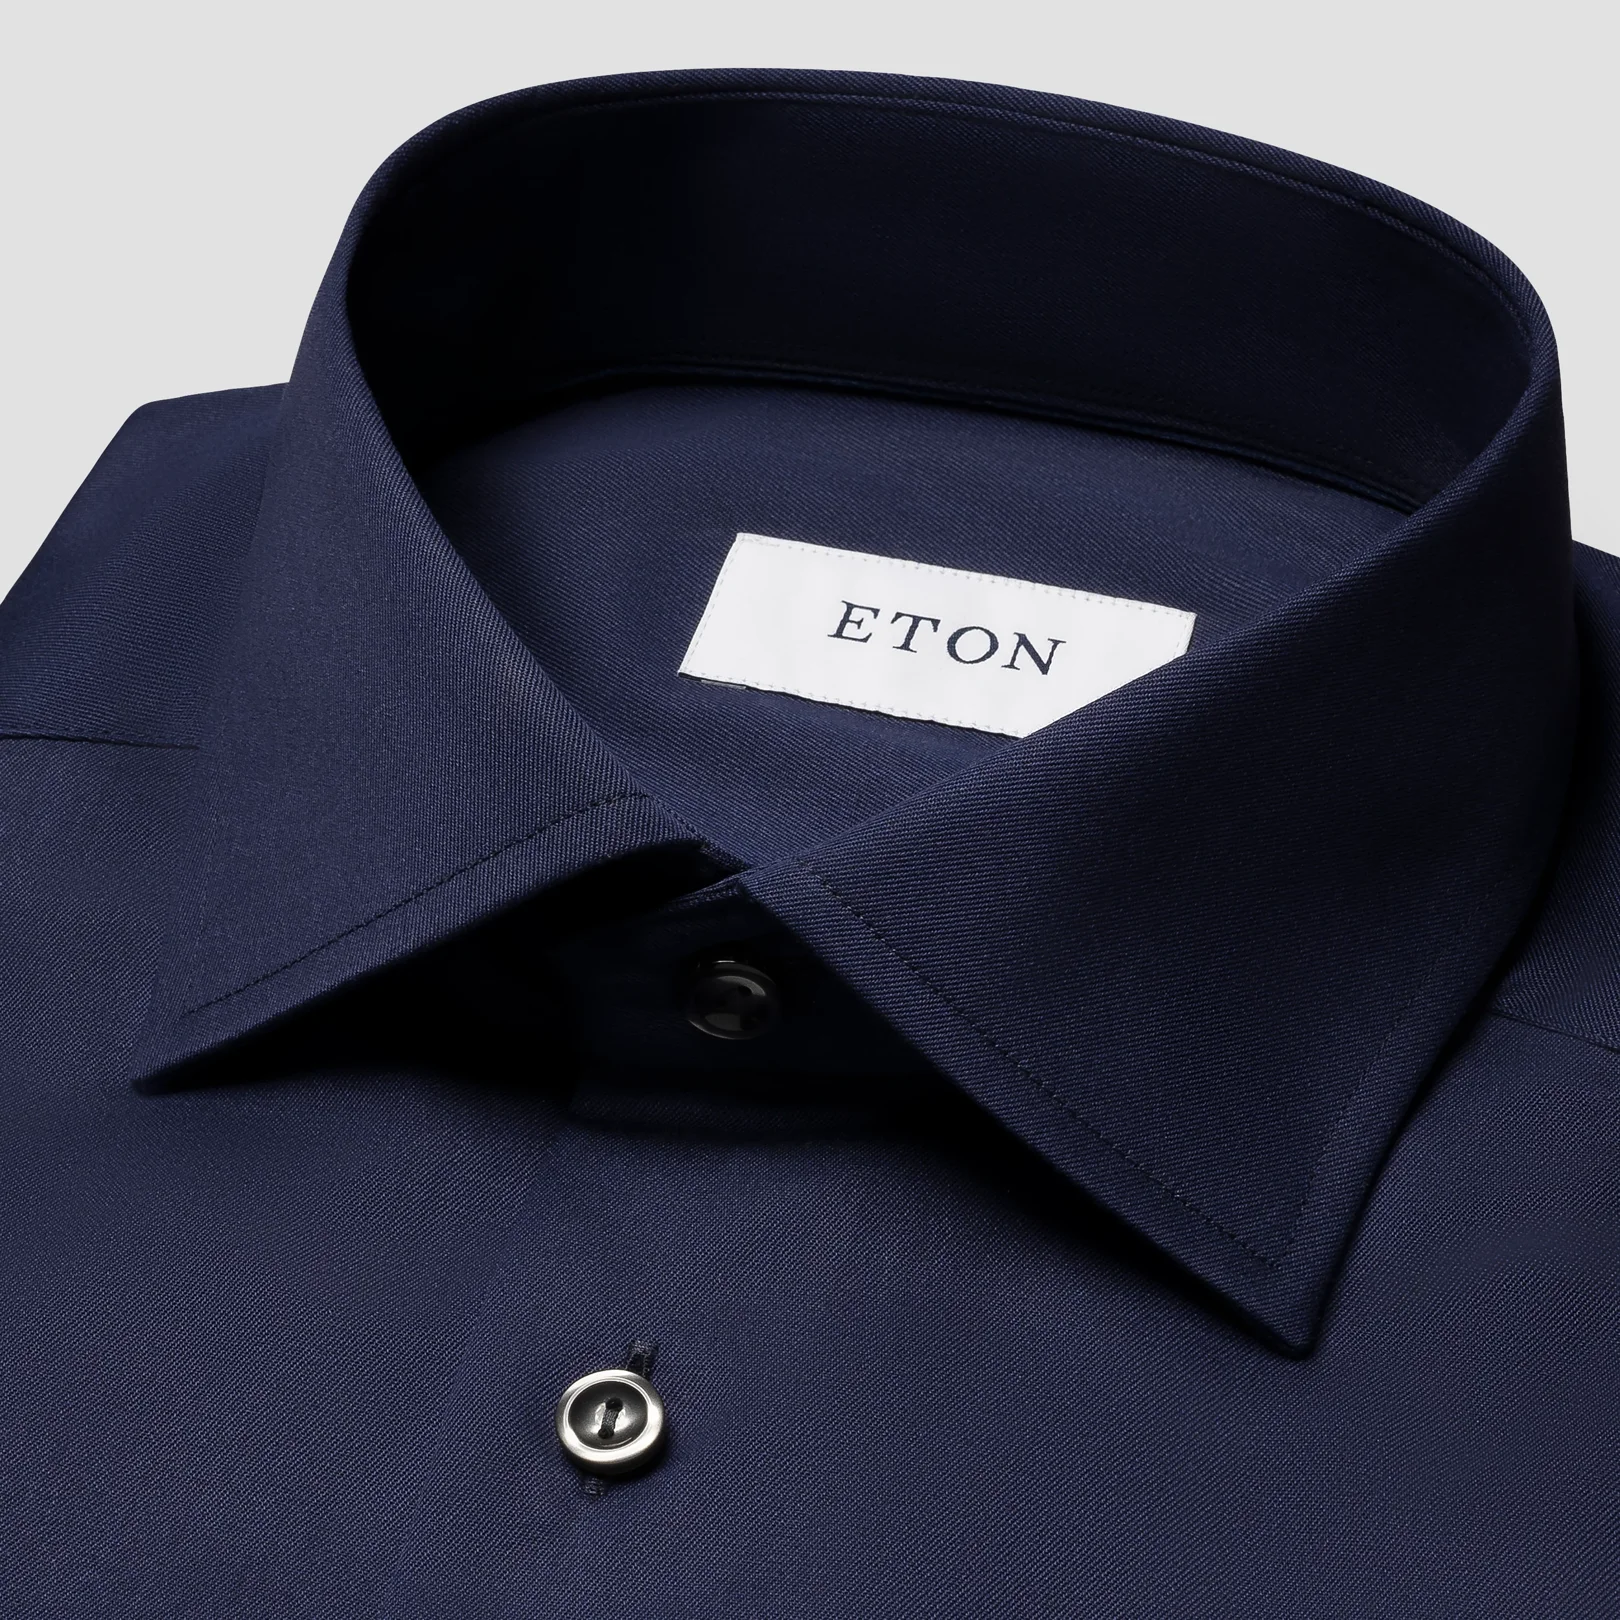 Eton - navy shirt signature twill